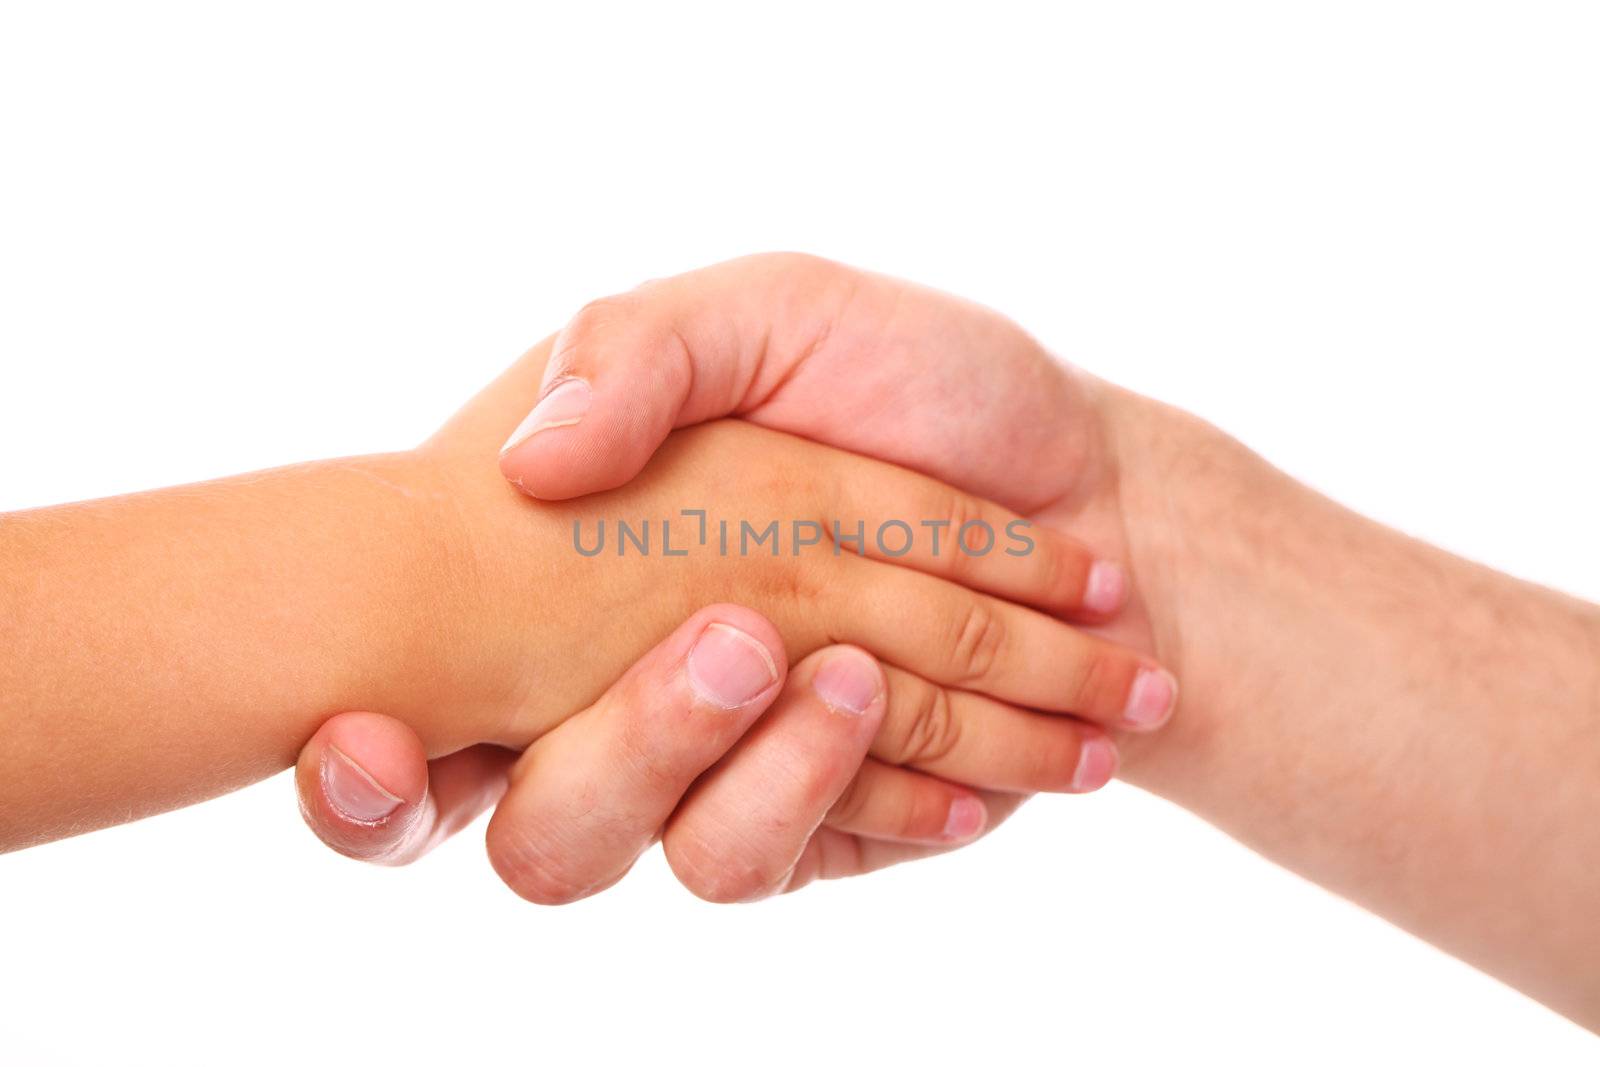 Hand shake of the child and father by rufatjumali